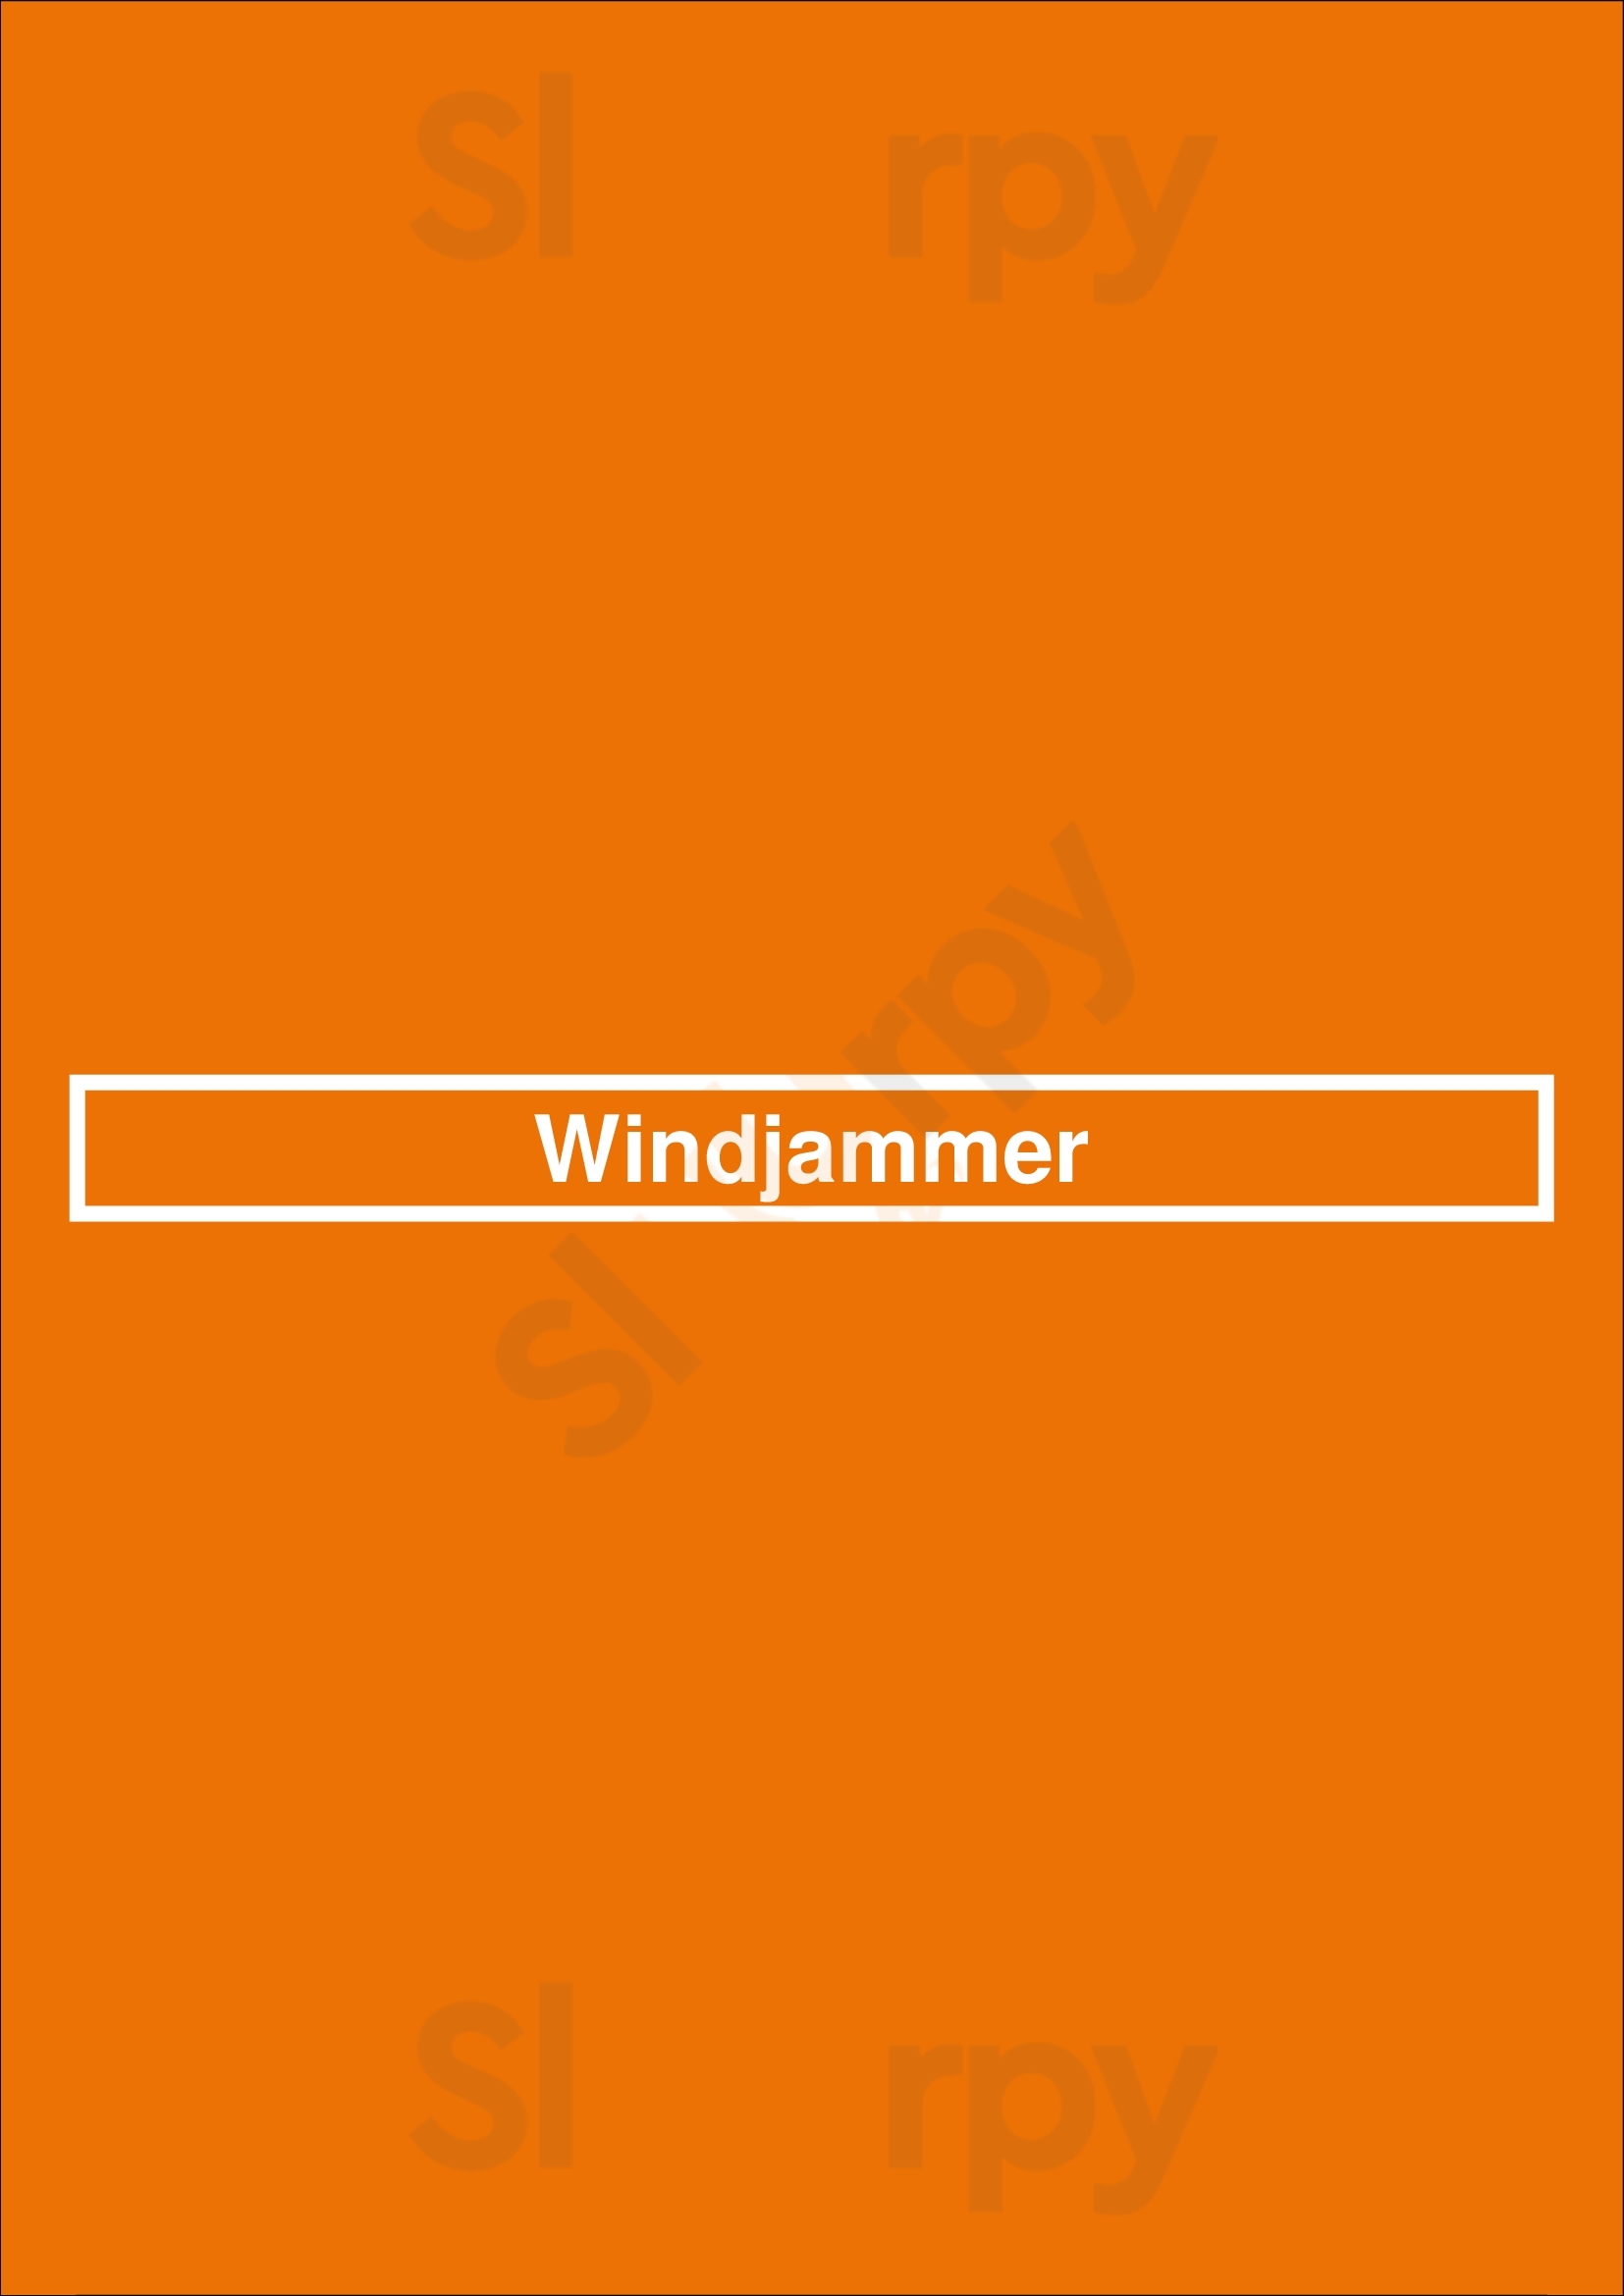 Windjammer Moncton Menu - 1